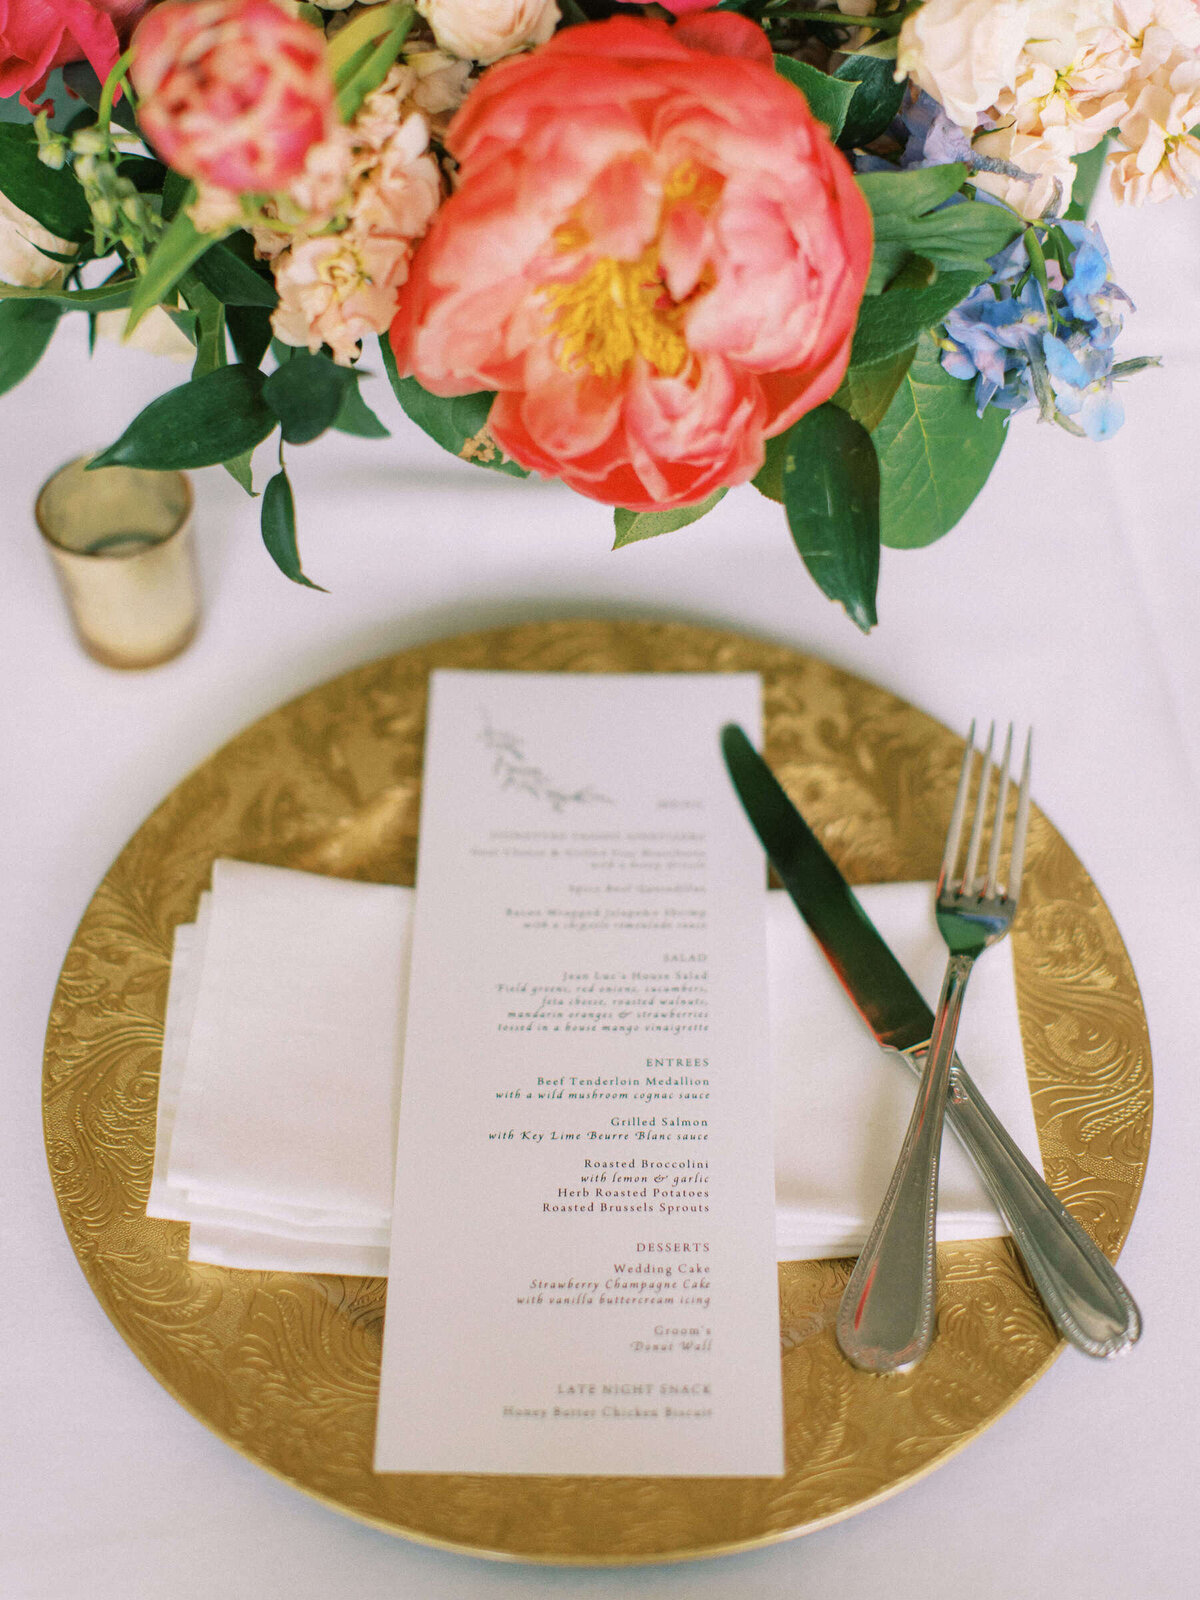 Dinner menu at elegant wedding in Dallas Texas